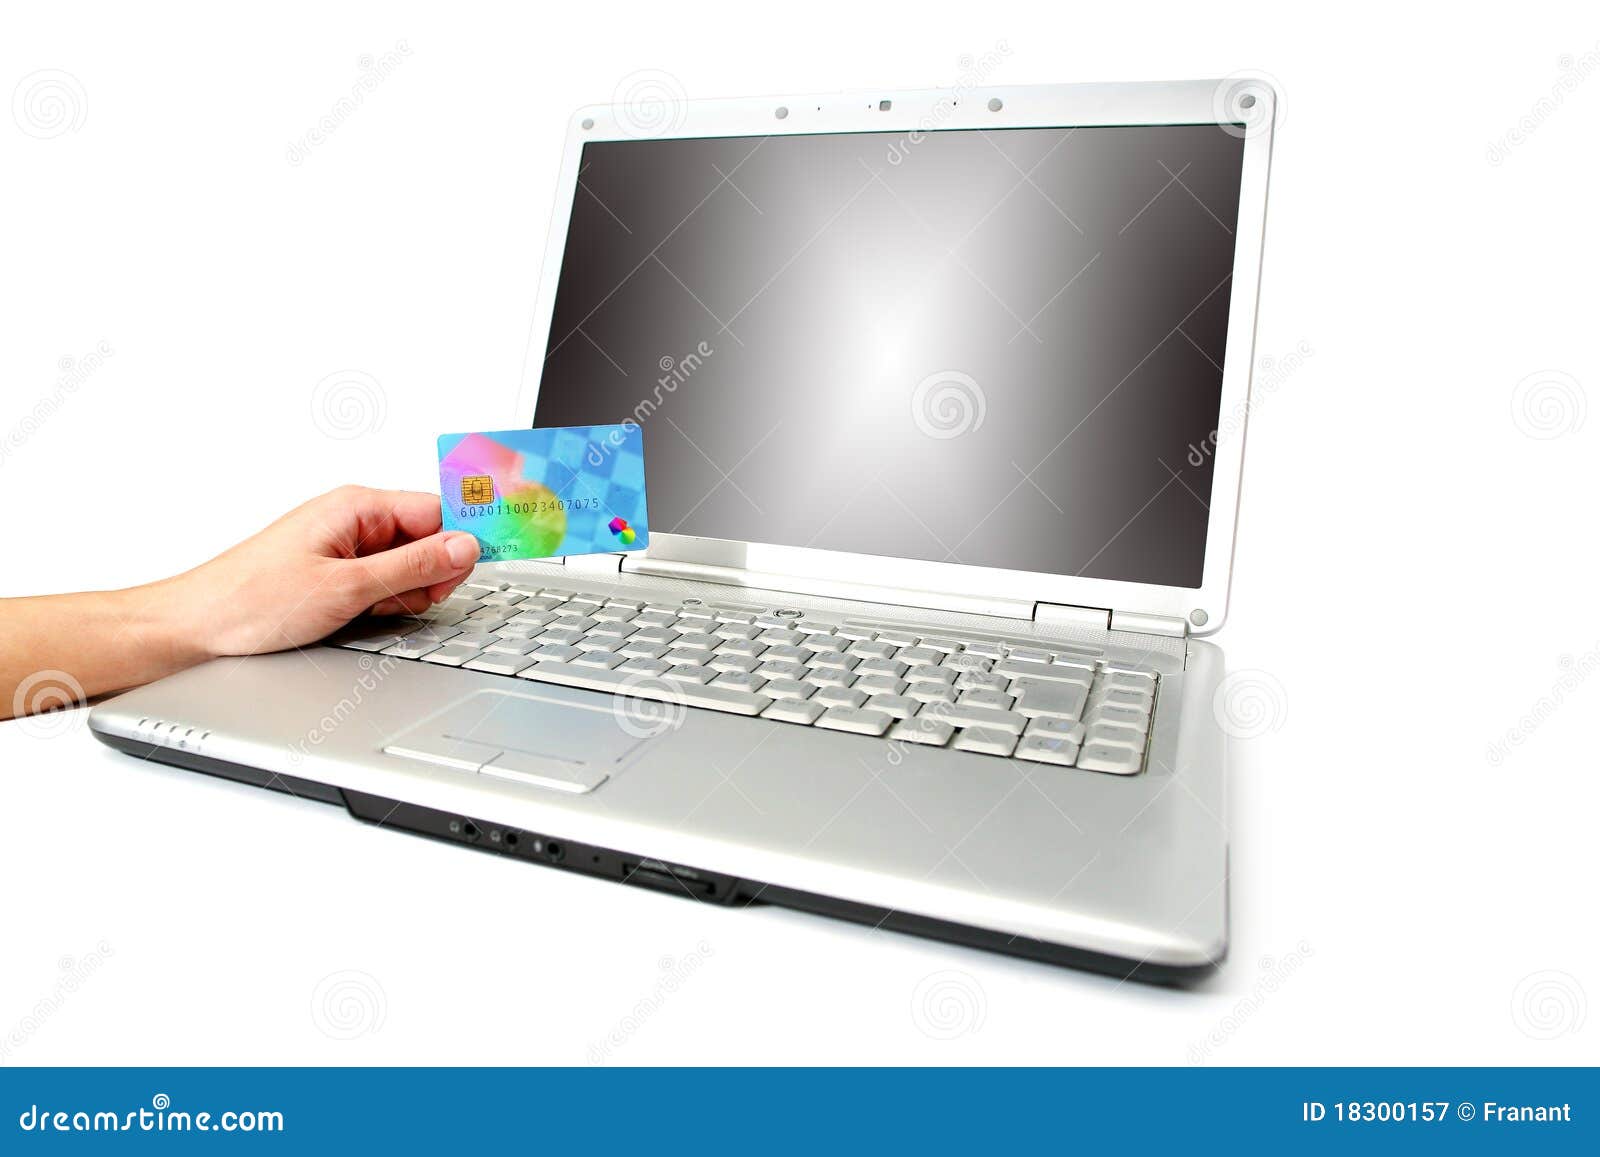 Laptop online purchase stock image. Image of buying